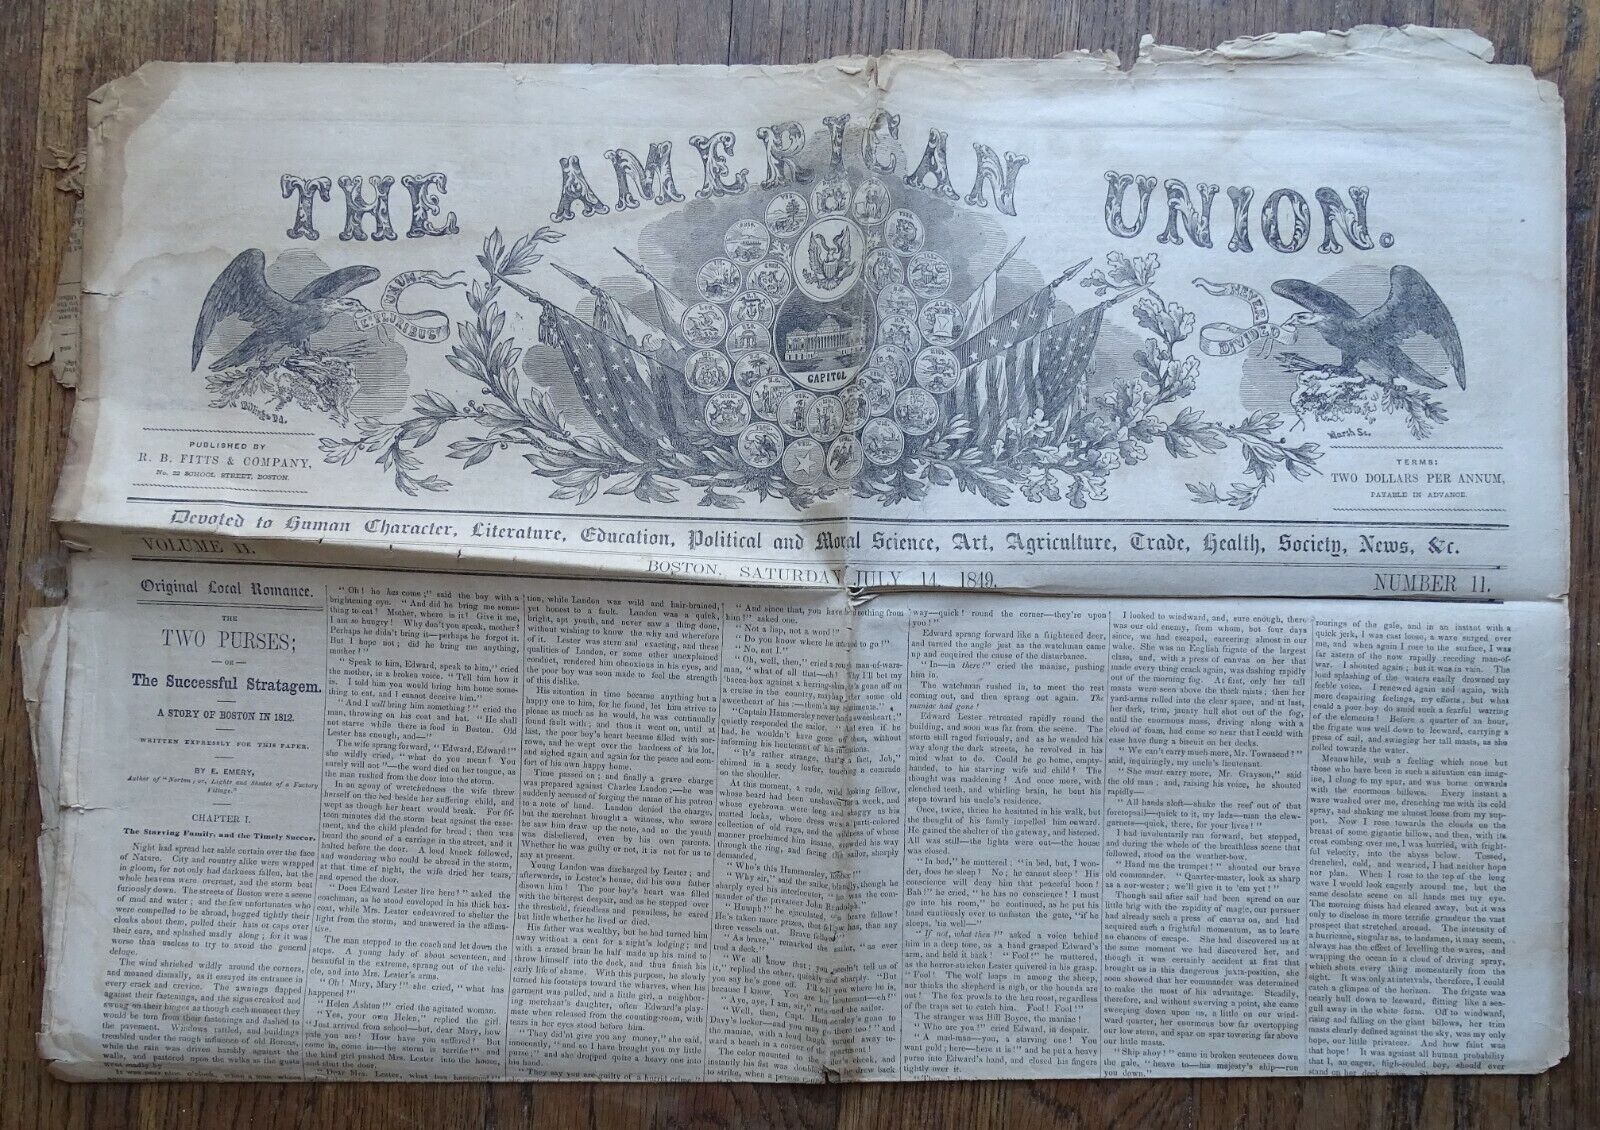 The American Union July 14 1849 Boston Newspaper